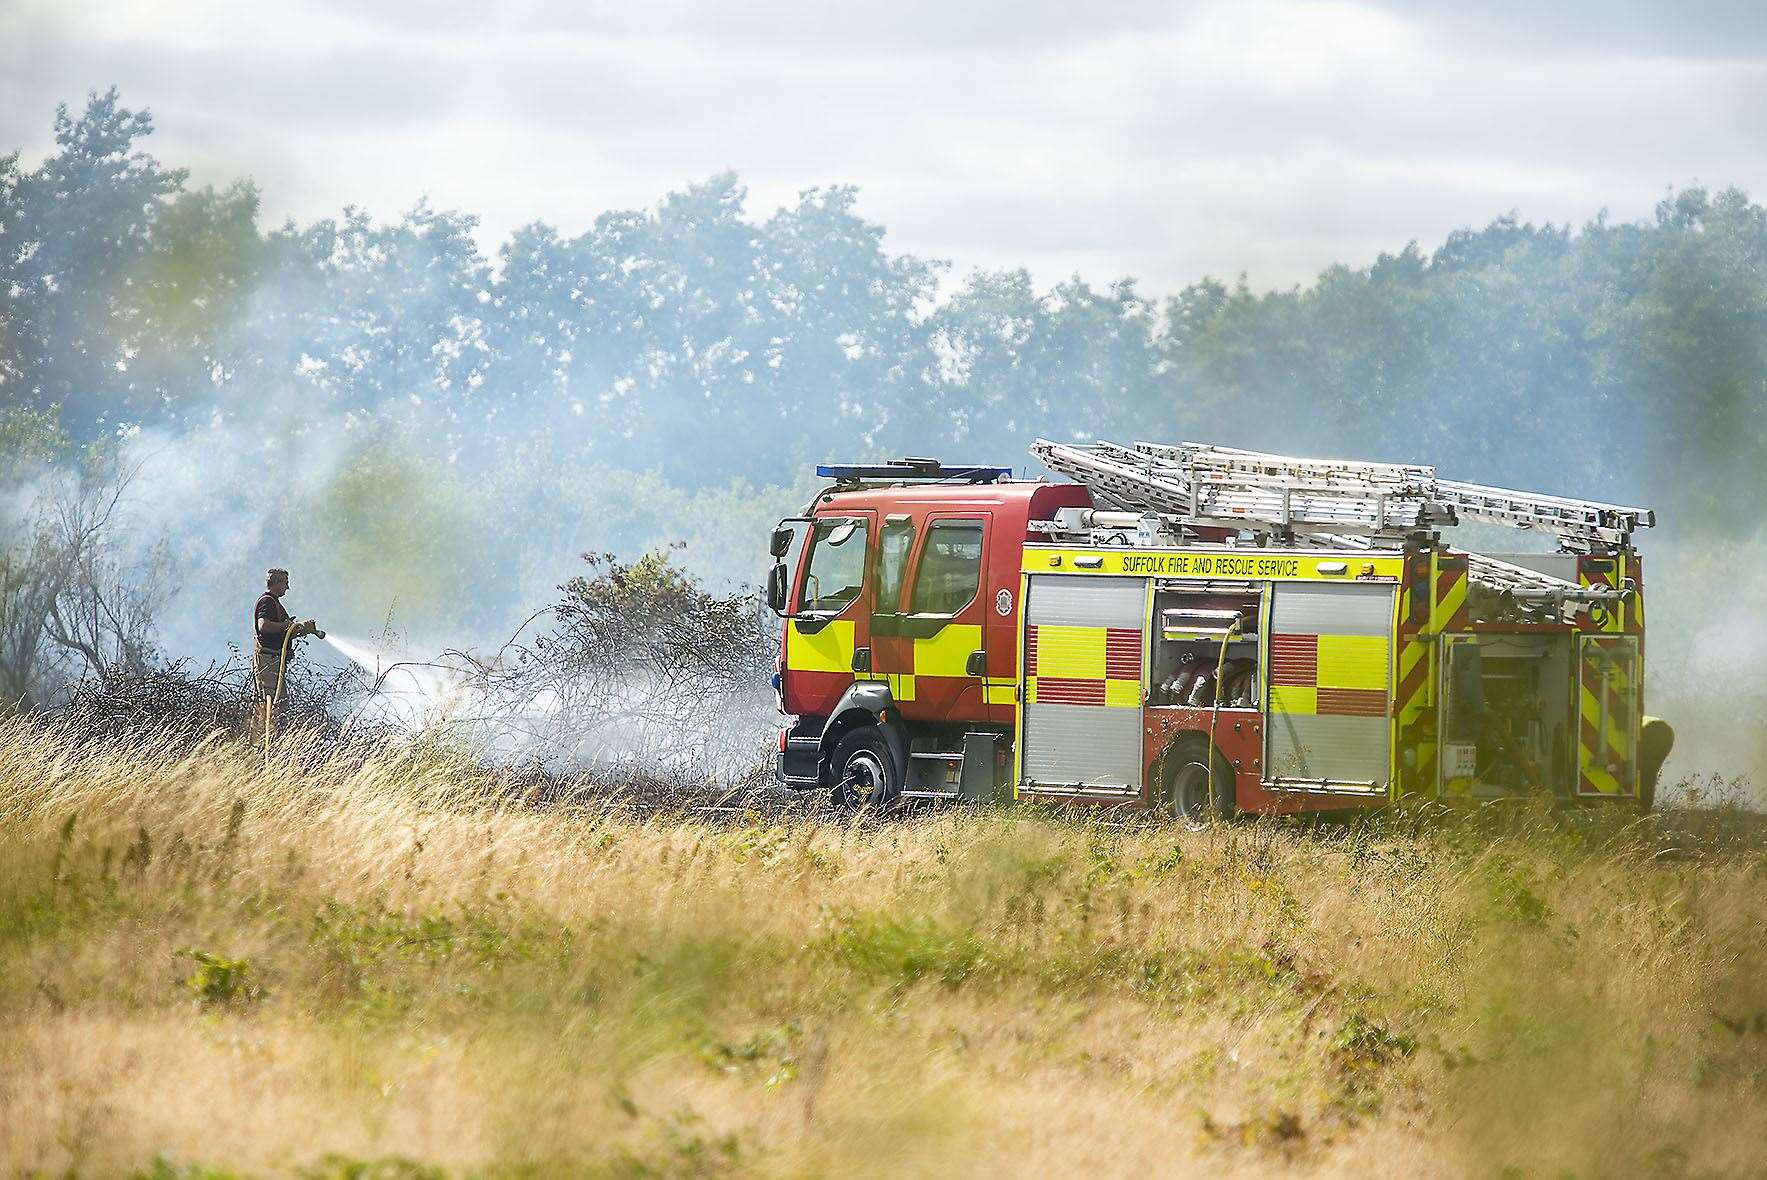 Fire engine fights field blaze. Stock photo: Mark Westley